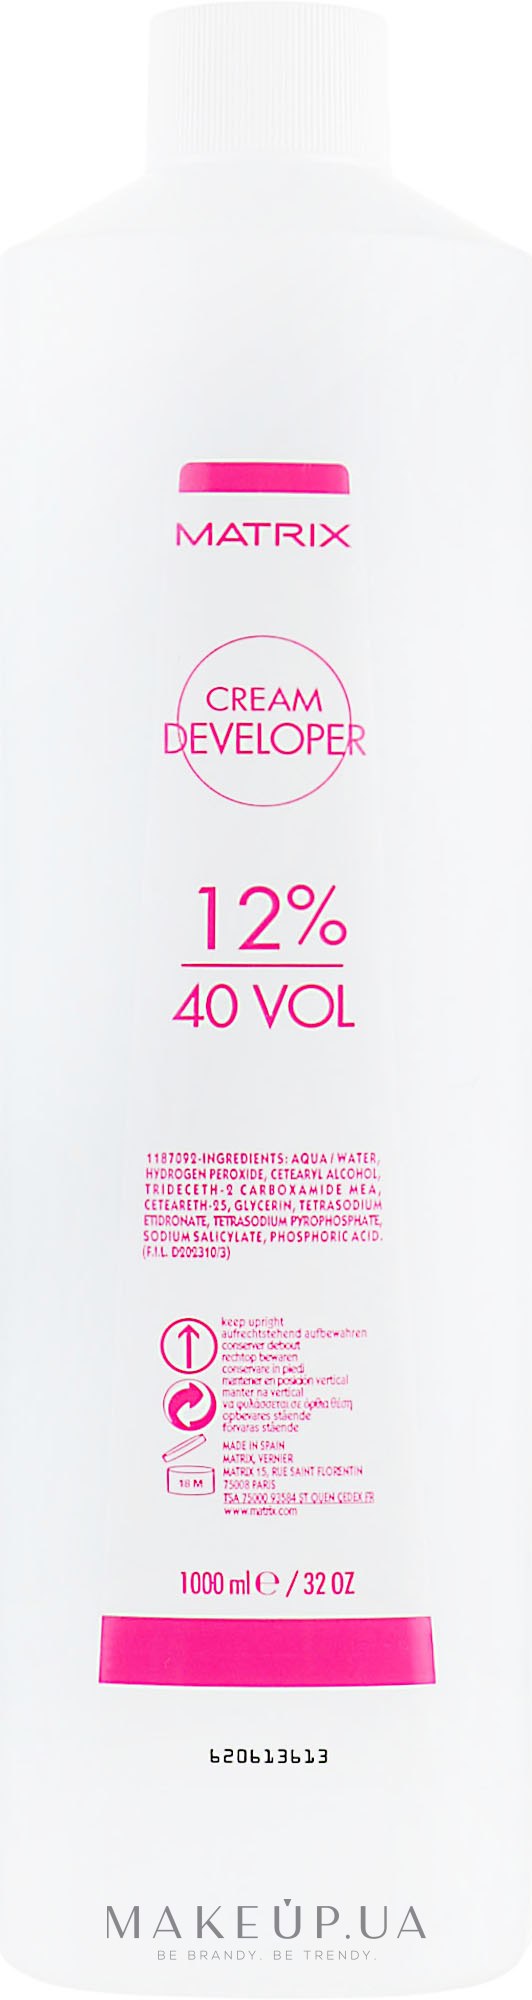 Крем-оксидант - Matrix Cream Developer 40 Vol. 12%  — фото 1000ml